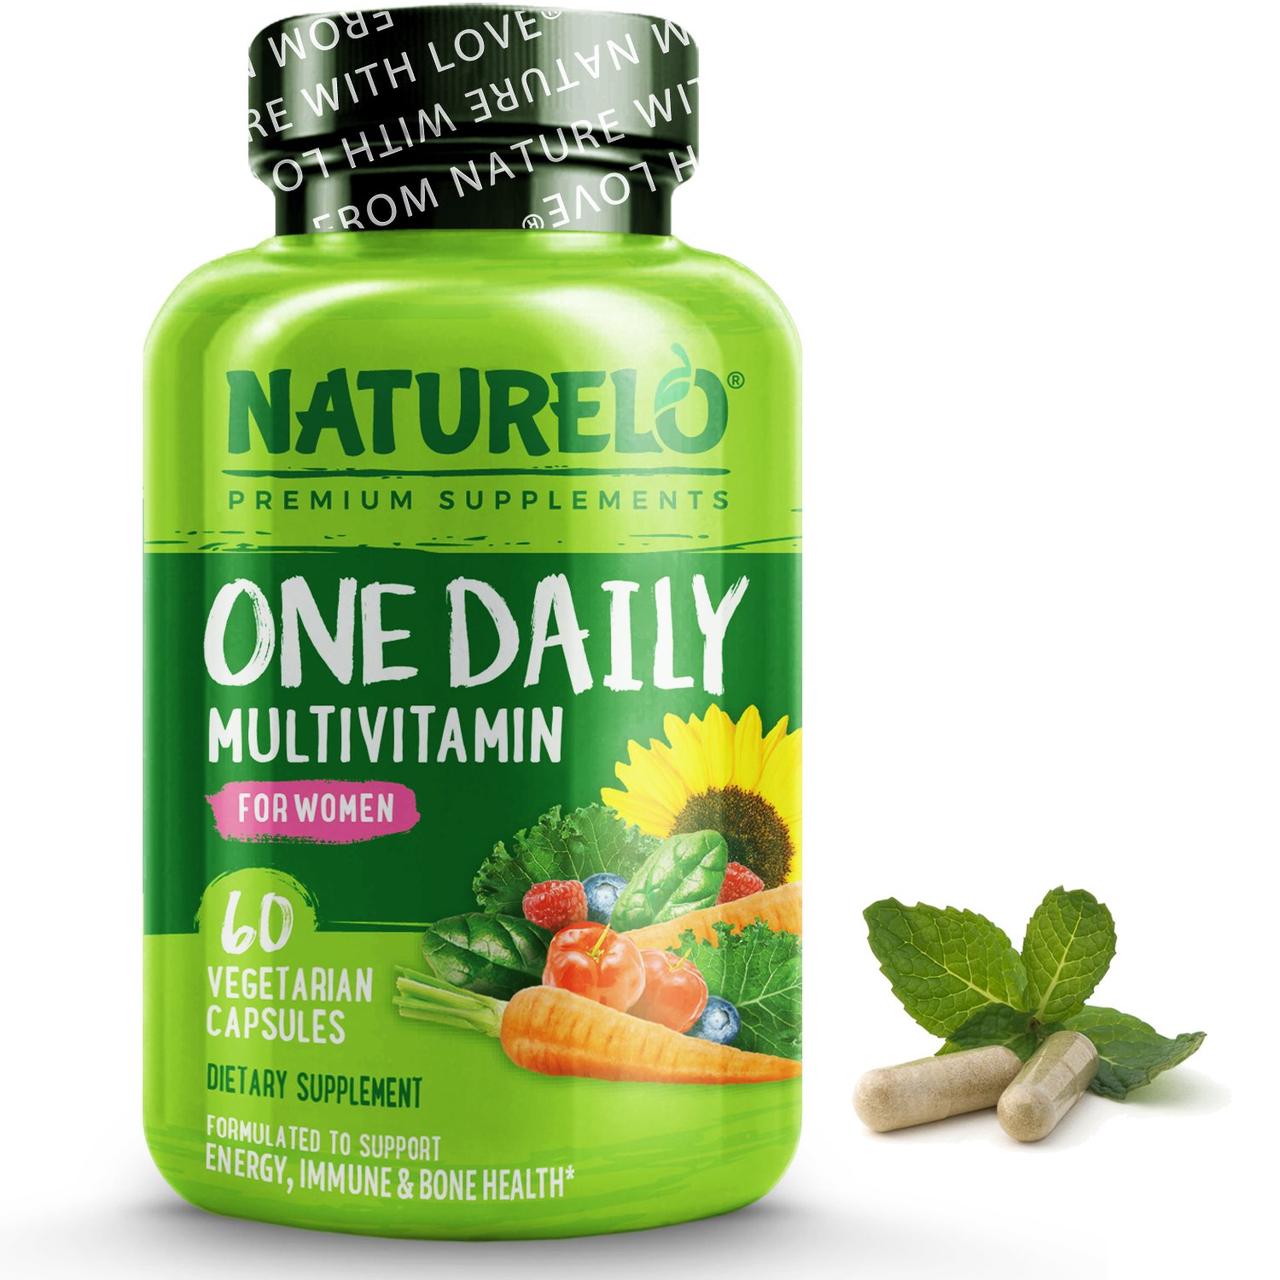 NATURELO One Daily Multivitamin for Women 60 Capsules вітаміни преміум класу з овочів, 60 капсул на 60 днів